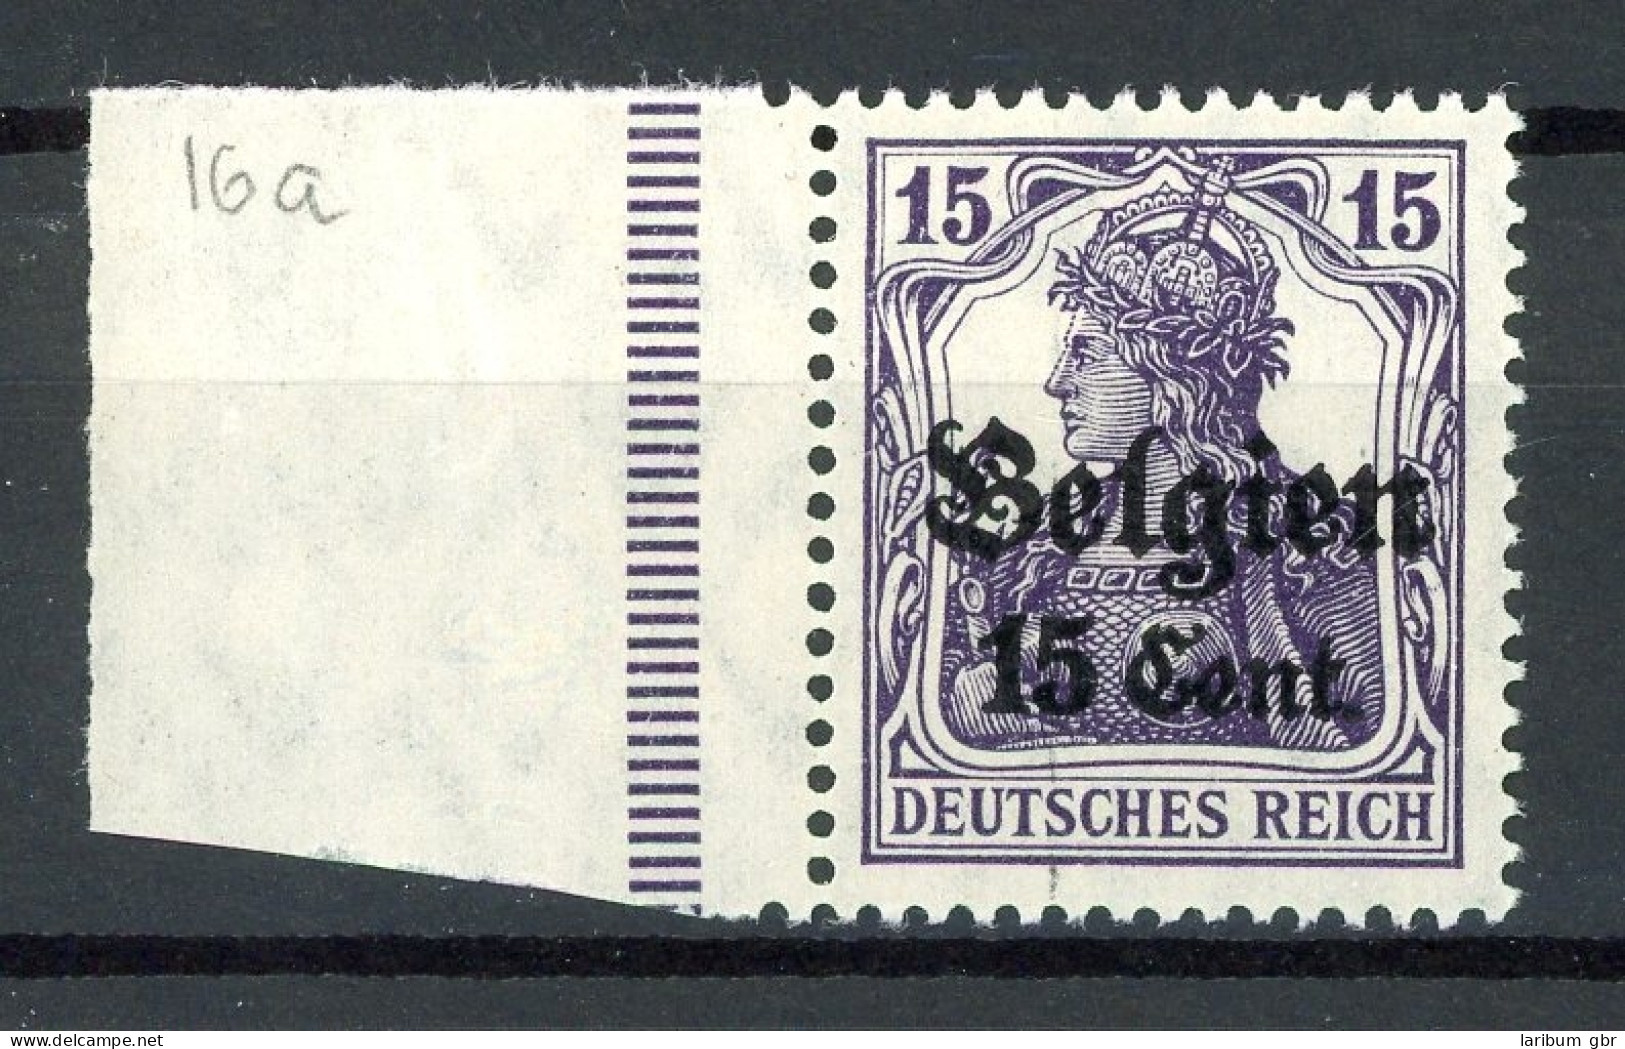 Deutsche Besetzung LP Belgien 16 A Postfrisch Farbgeprüft #HU602 - Occupation 1914-18